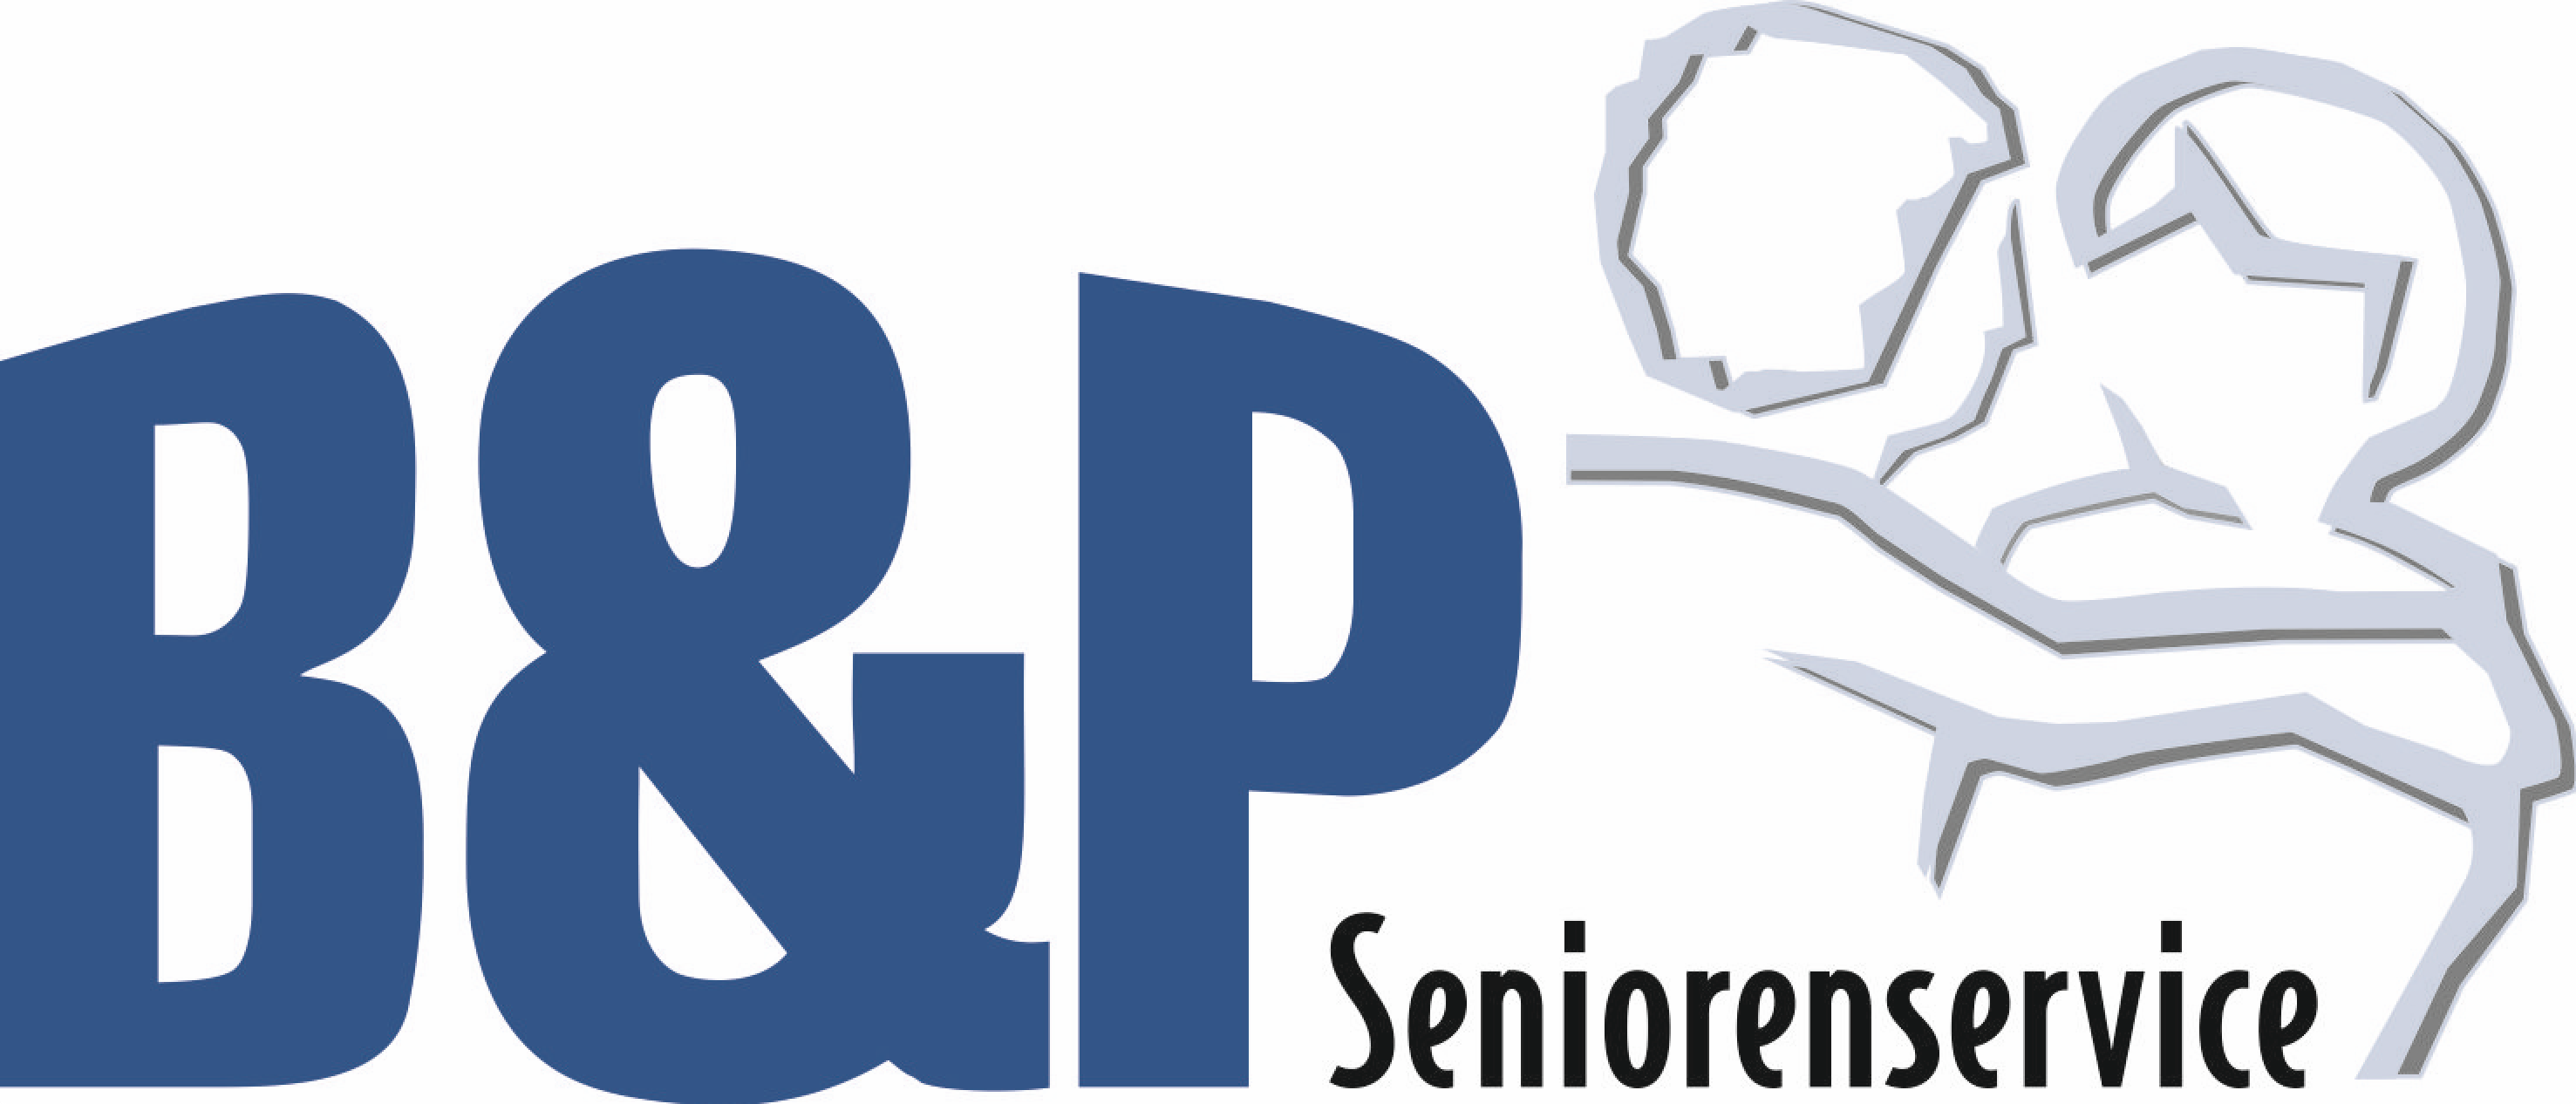 B&P Seniorenservice SANITÄTSHAUS